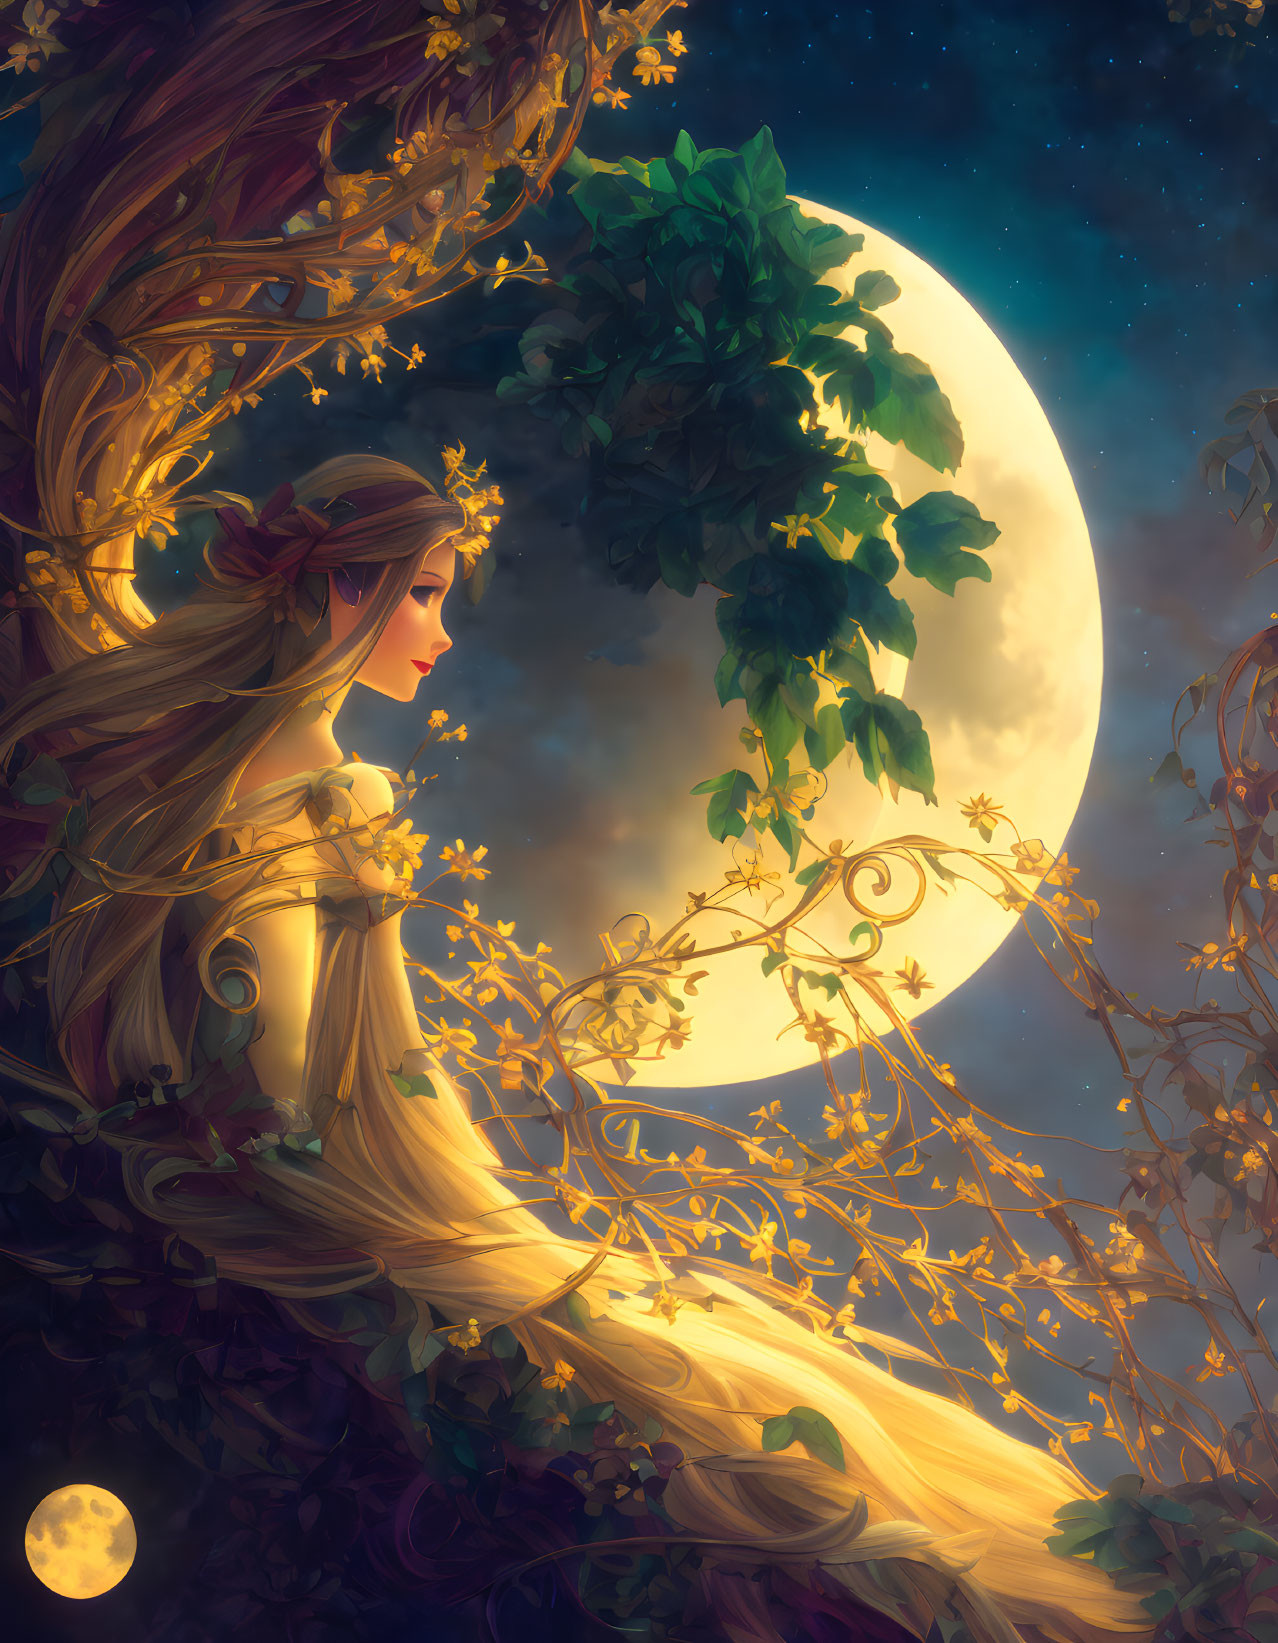 Woman sitting on vine branch under full moon in starry sky